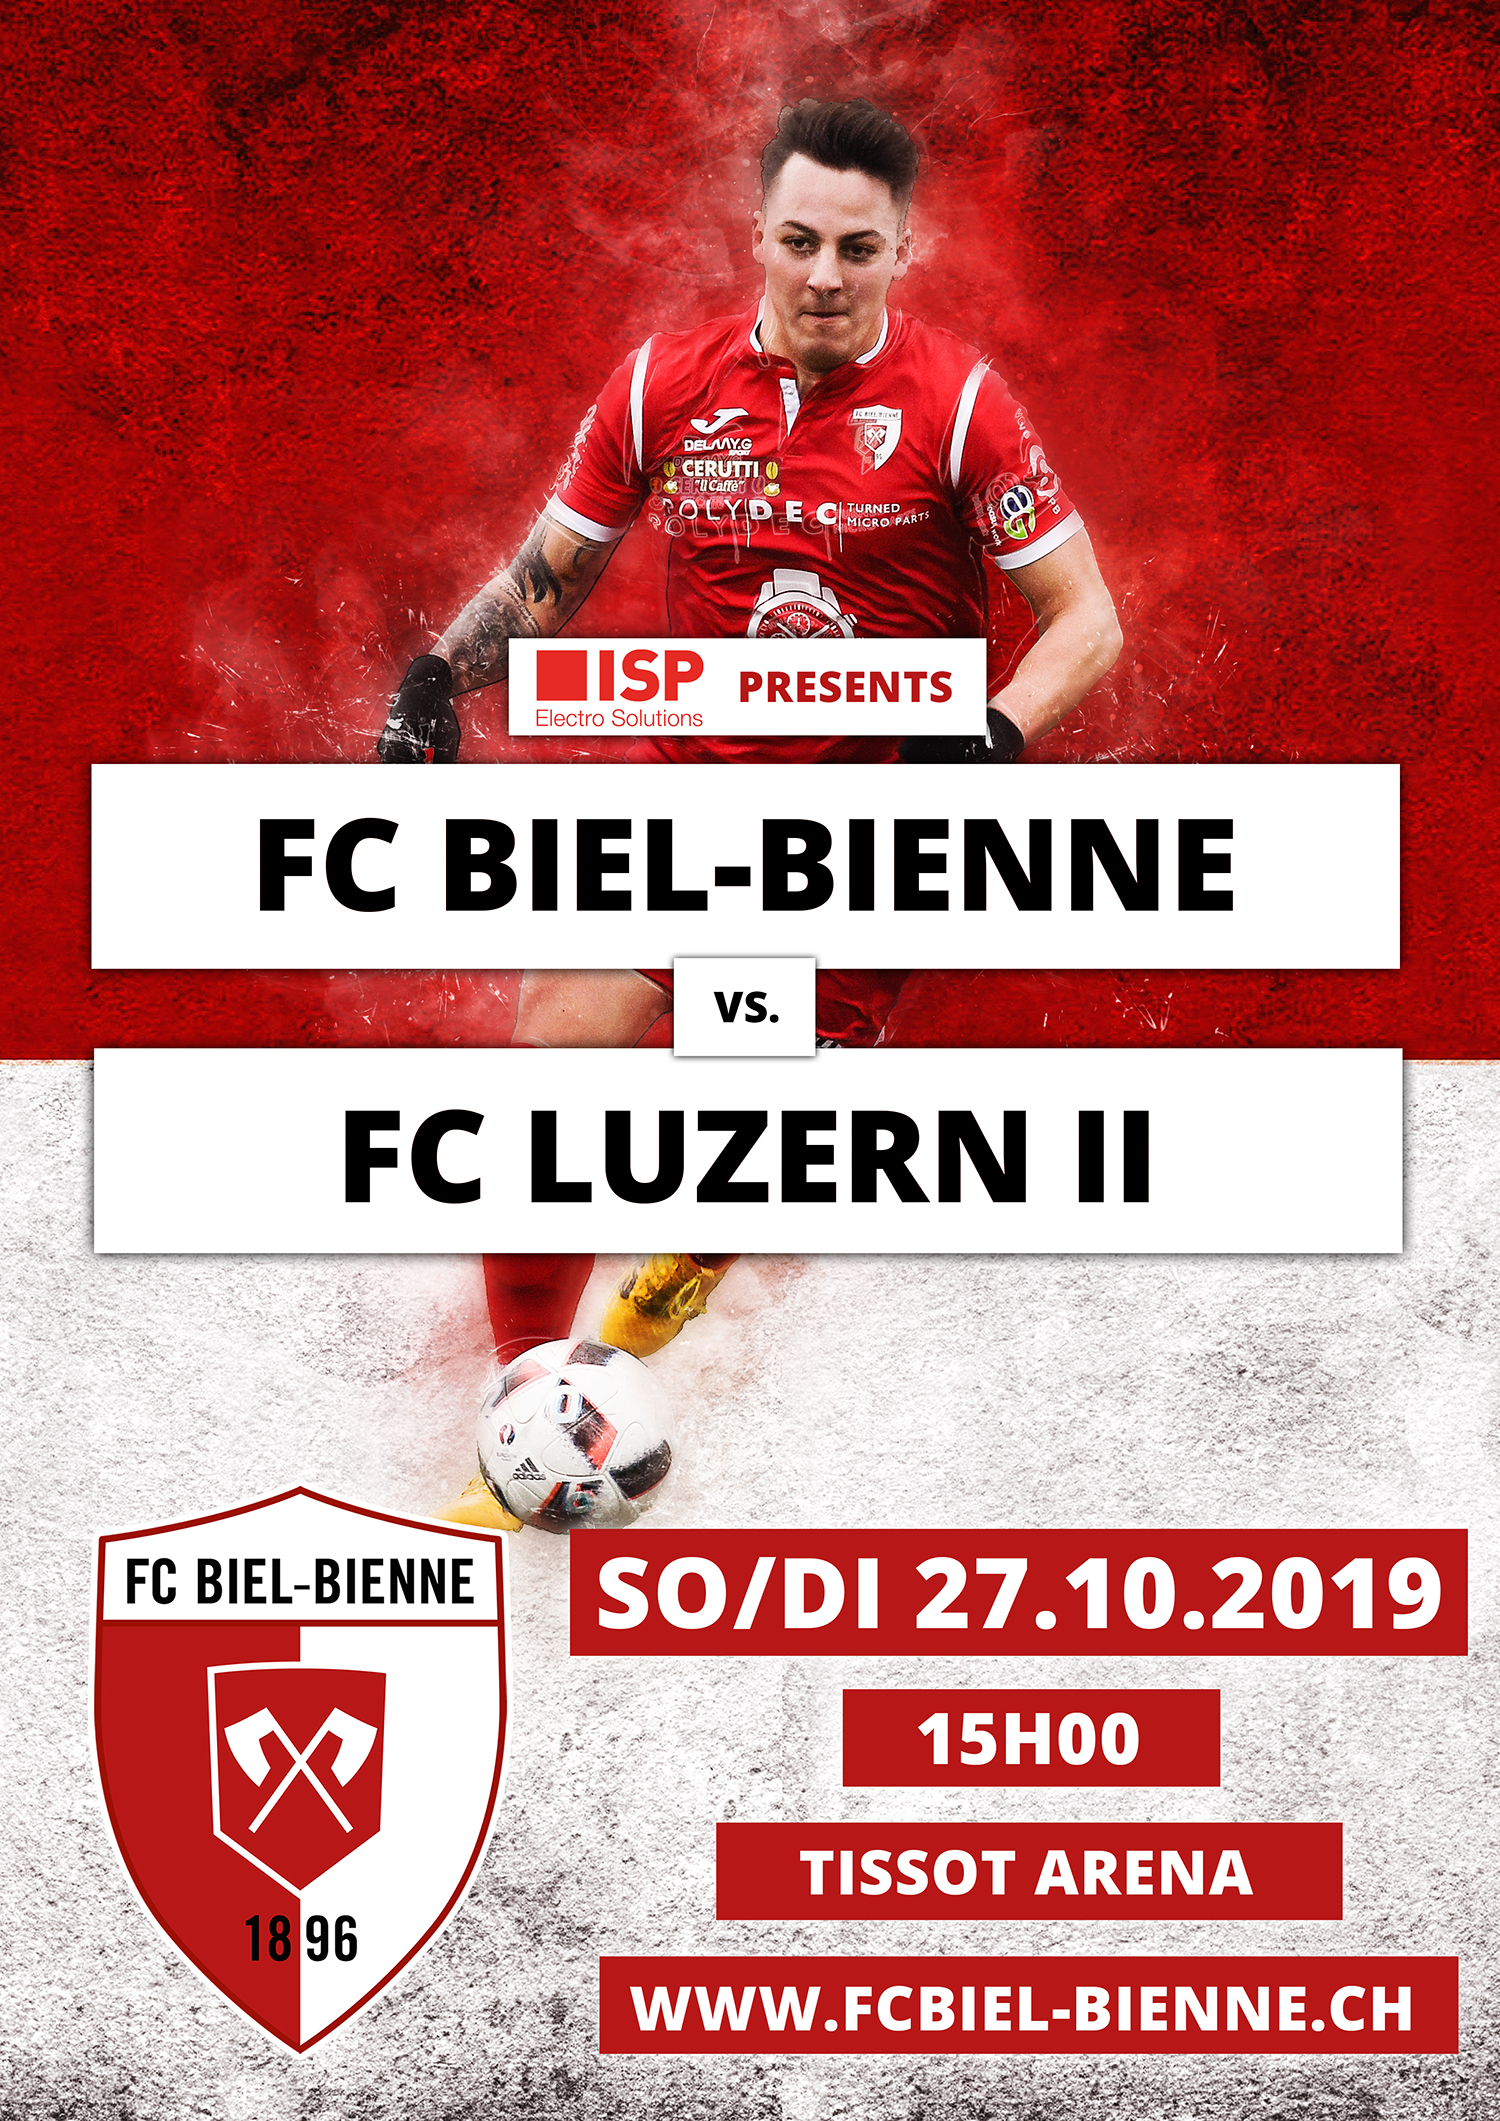 FC Biel-Bienne vs. FC Lucerne II